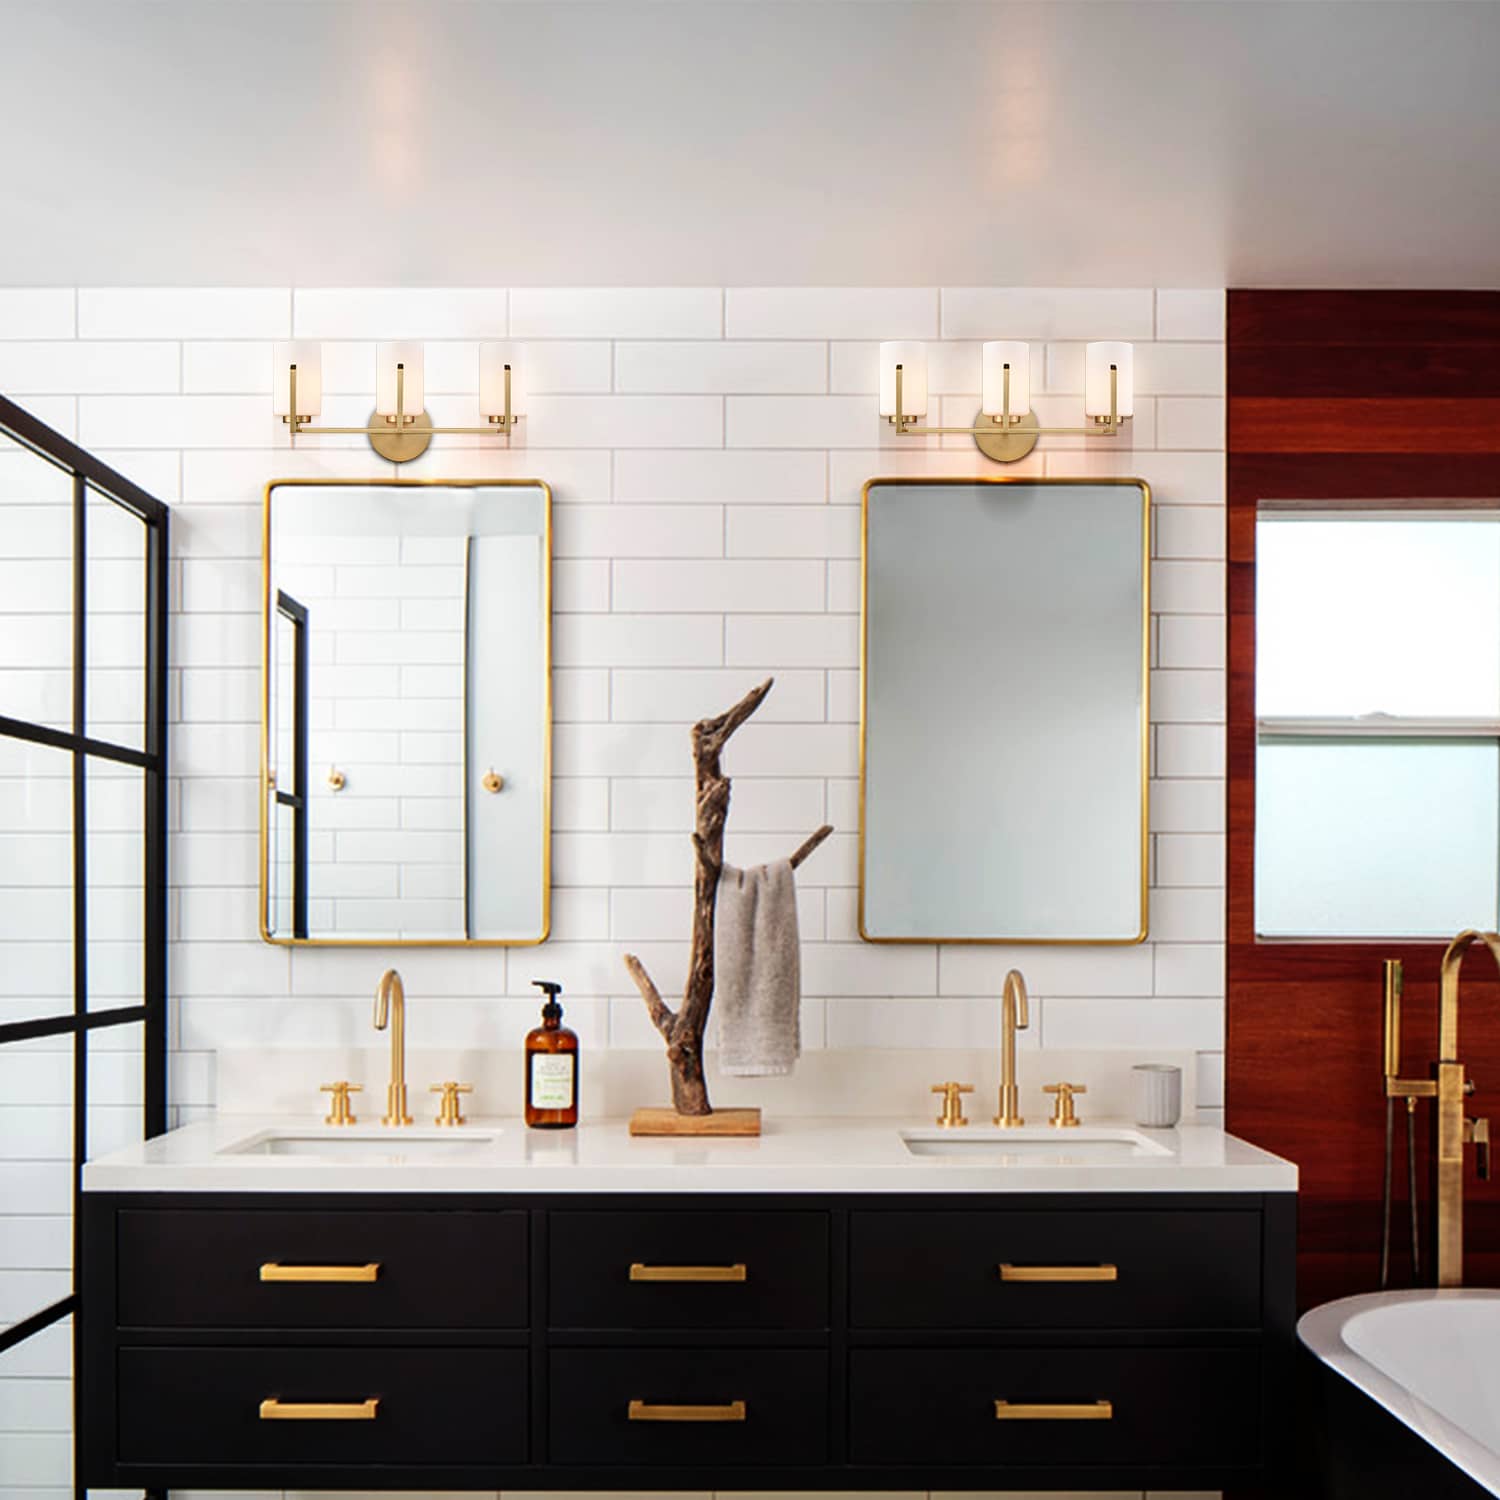 Modern 3-Light Gold Bathroom Vanity Lights with Opal Cylinders